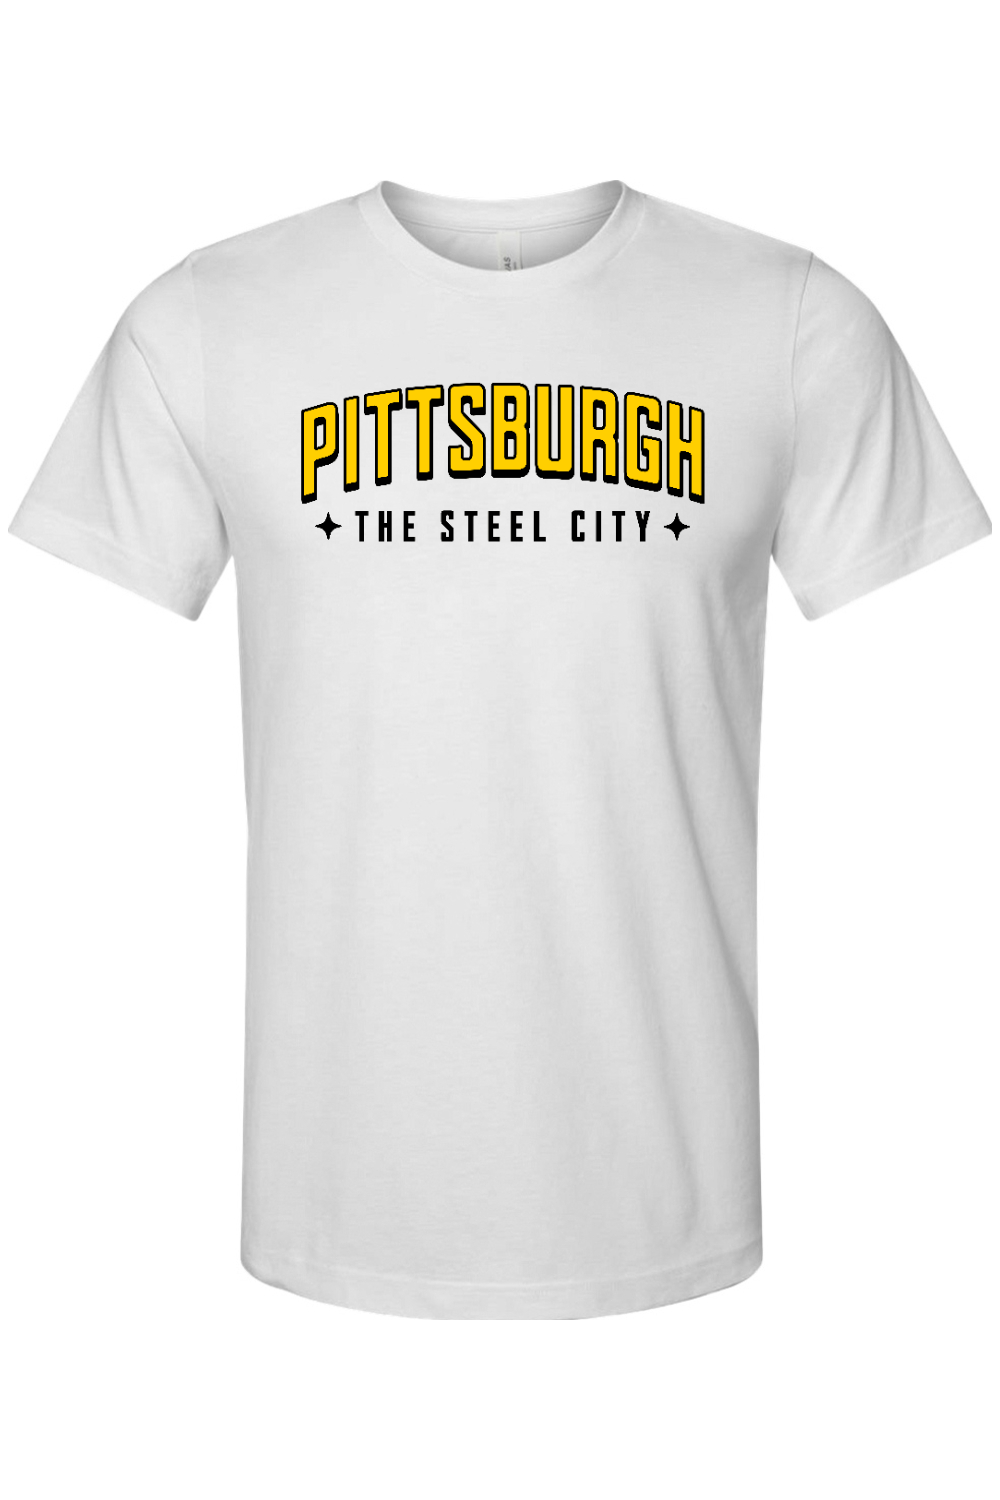 Pittsburgh - The Steel City - Yinzylvania